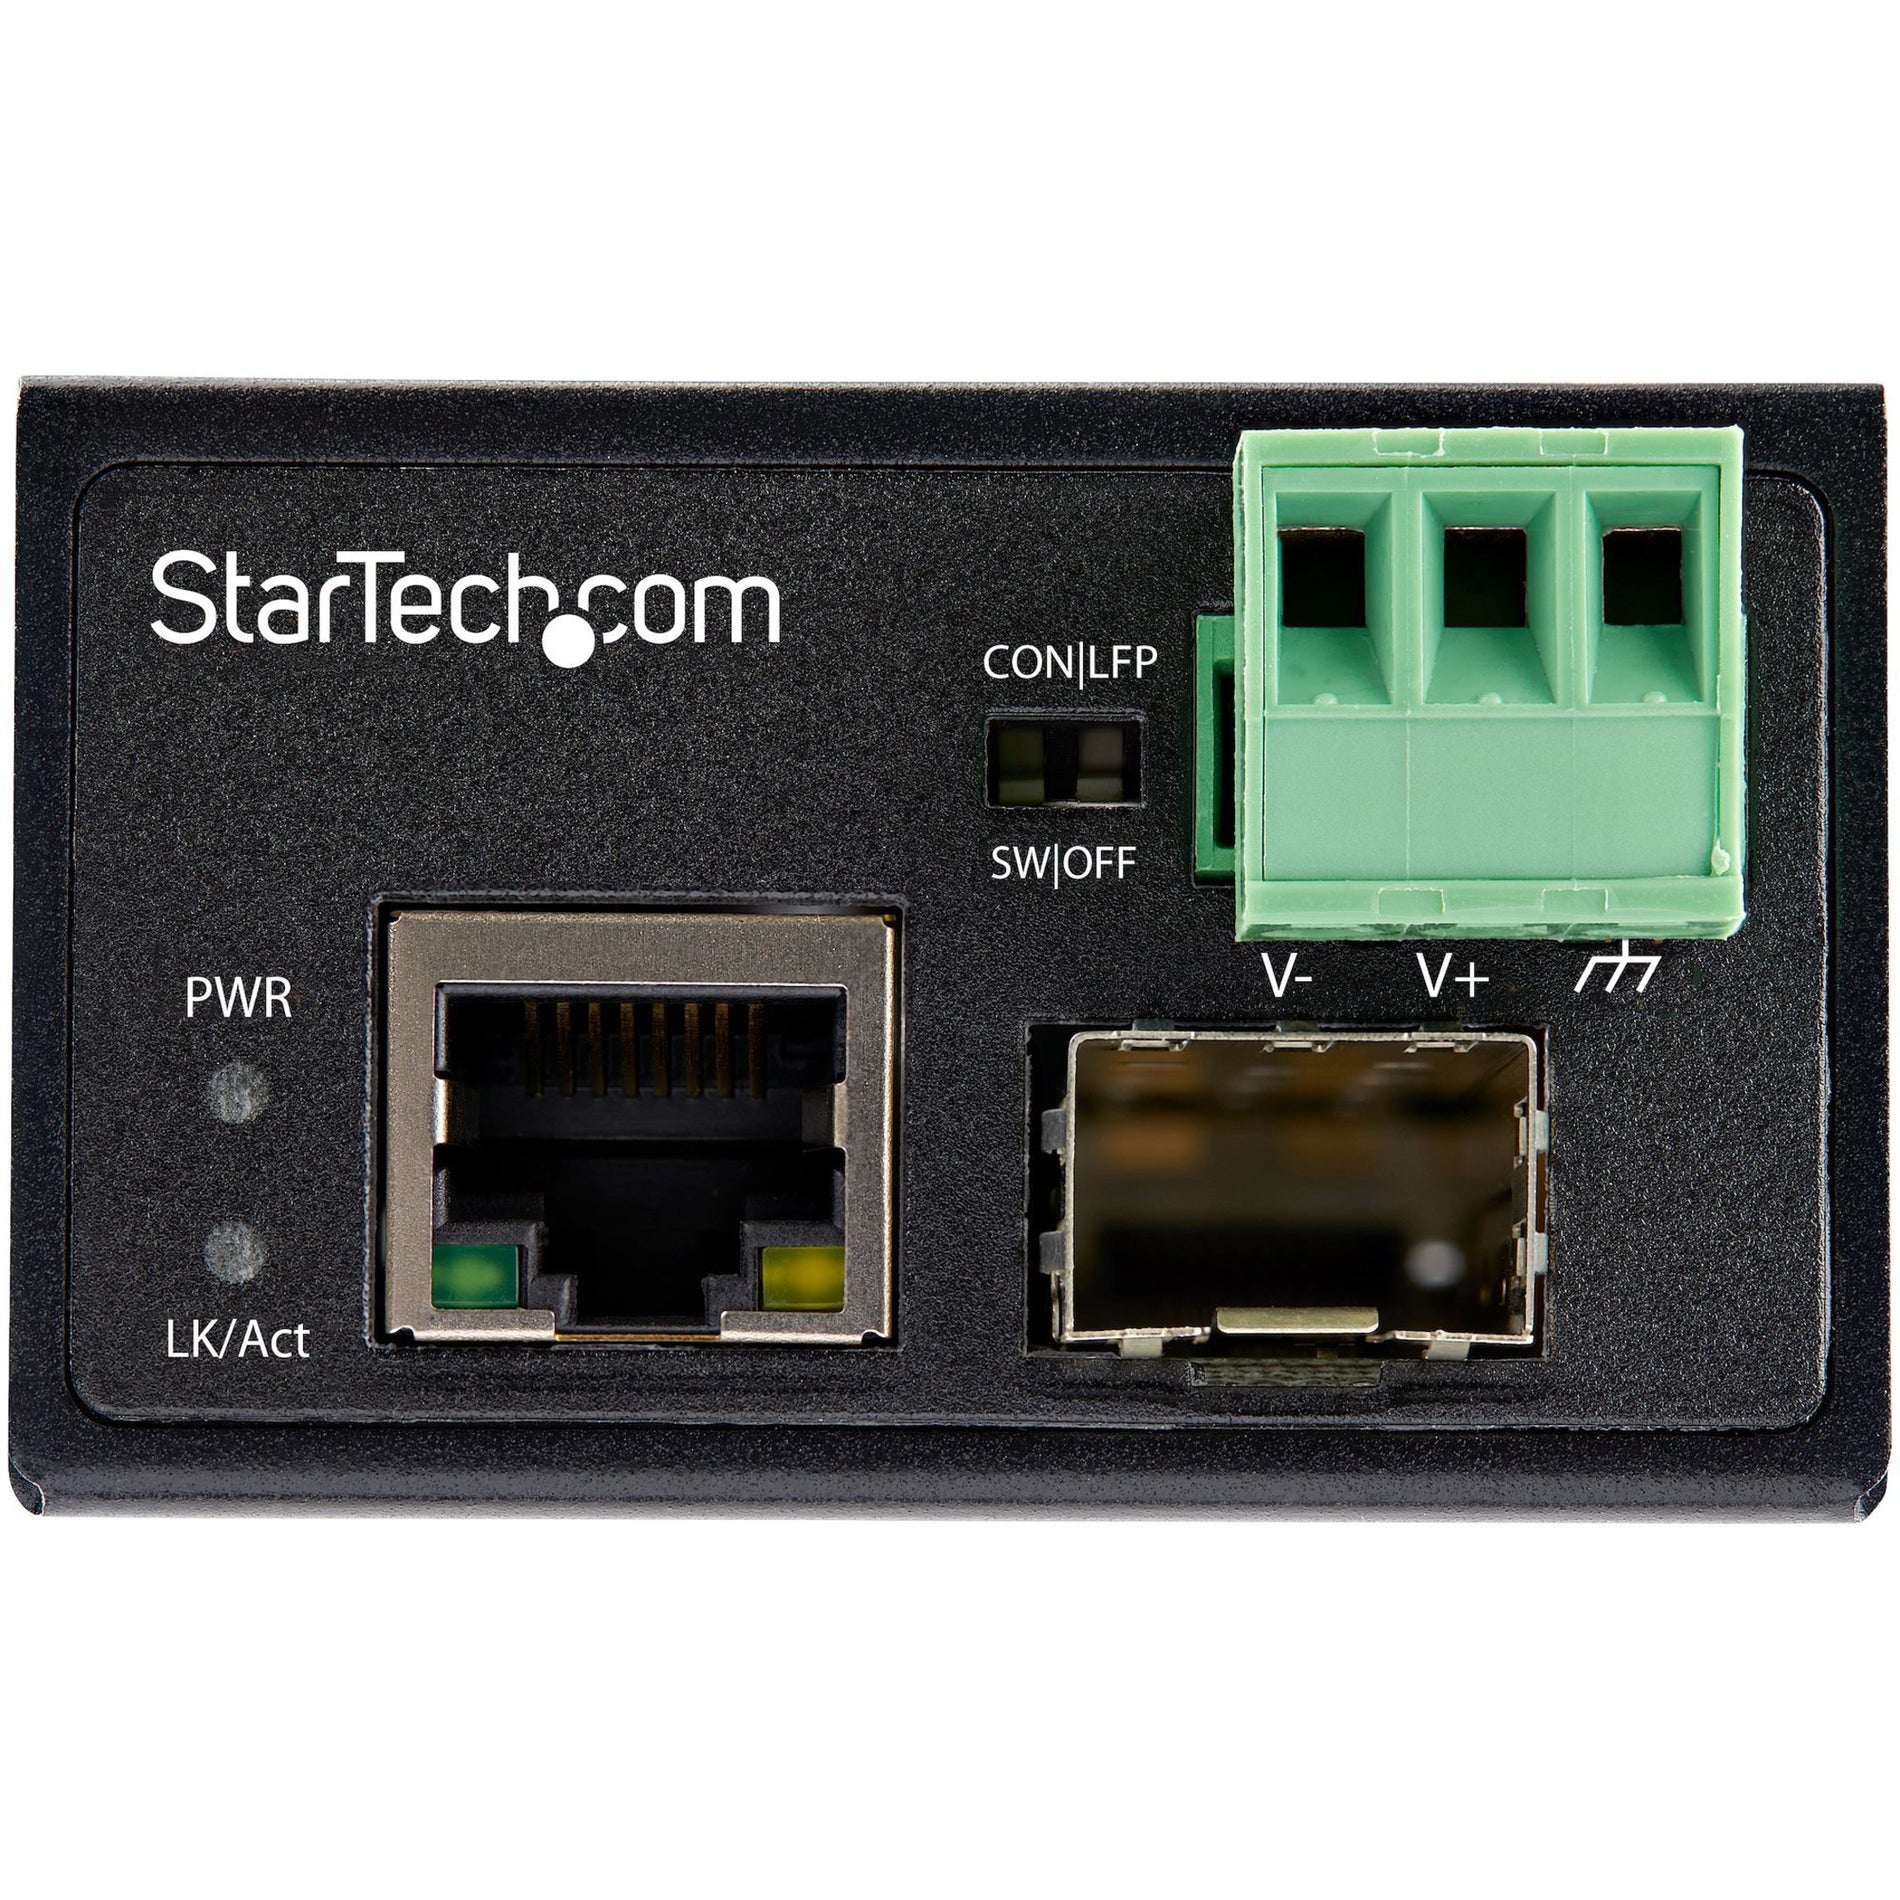 StarTech.com IMC100MSFP Transceiver/Media Converter, Fast Ethernet, Multi-mode/Single-mode, 328.08 ft Distance Supported